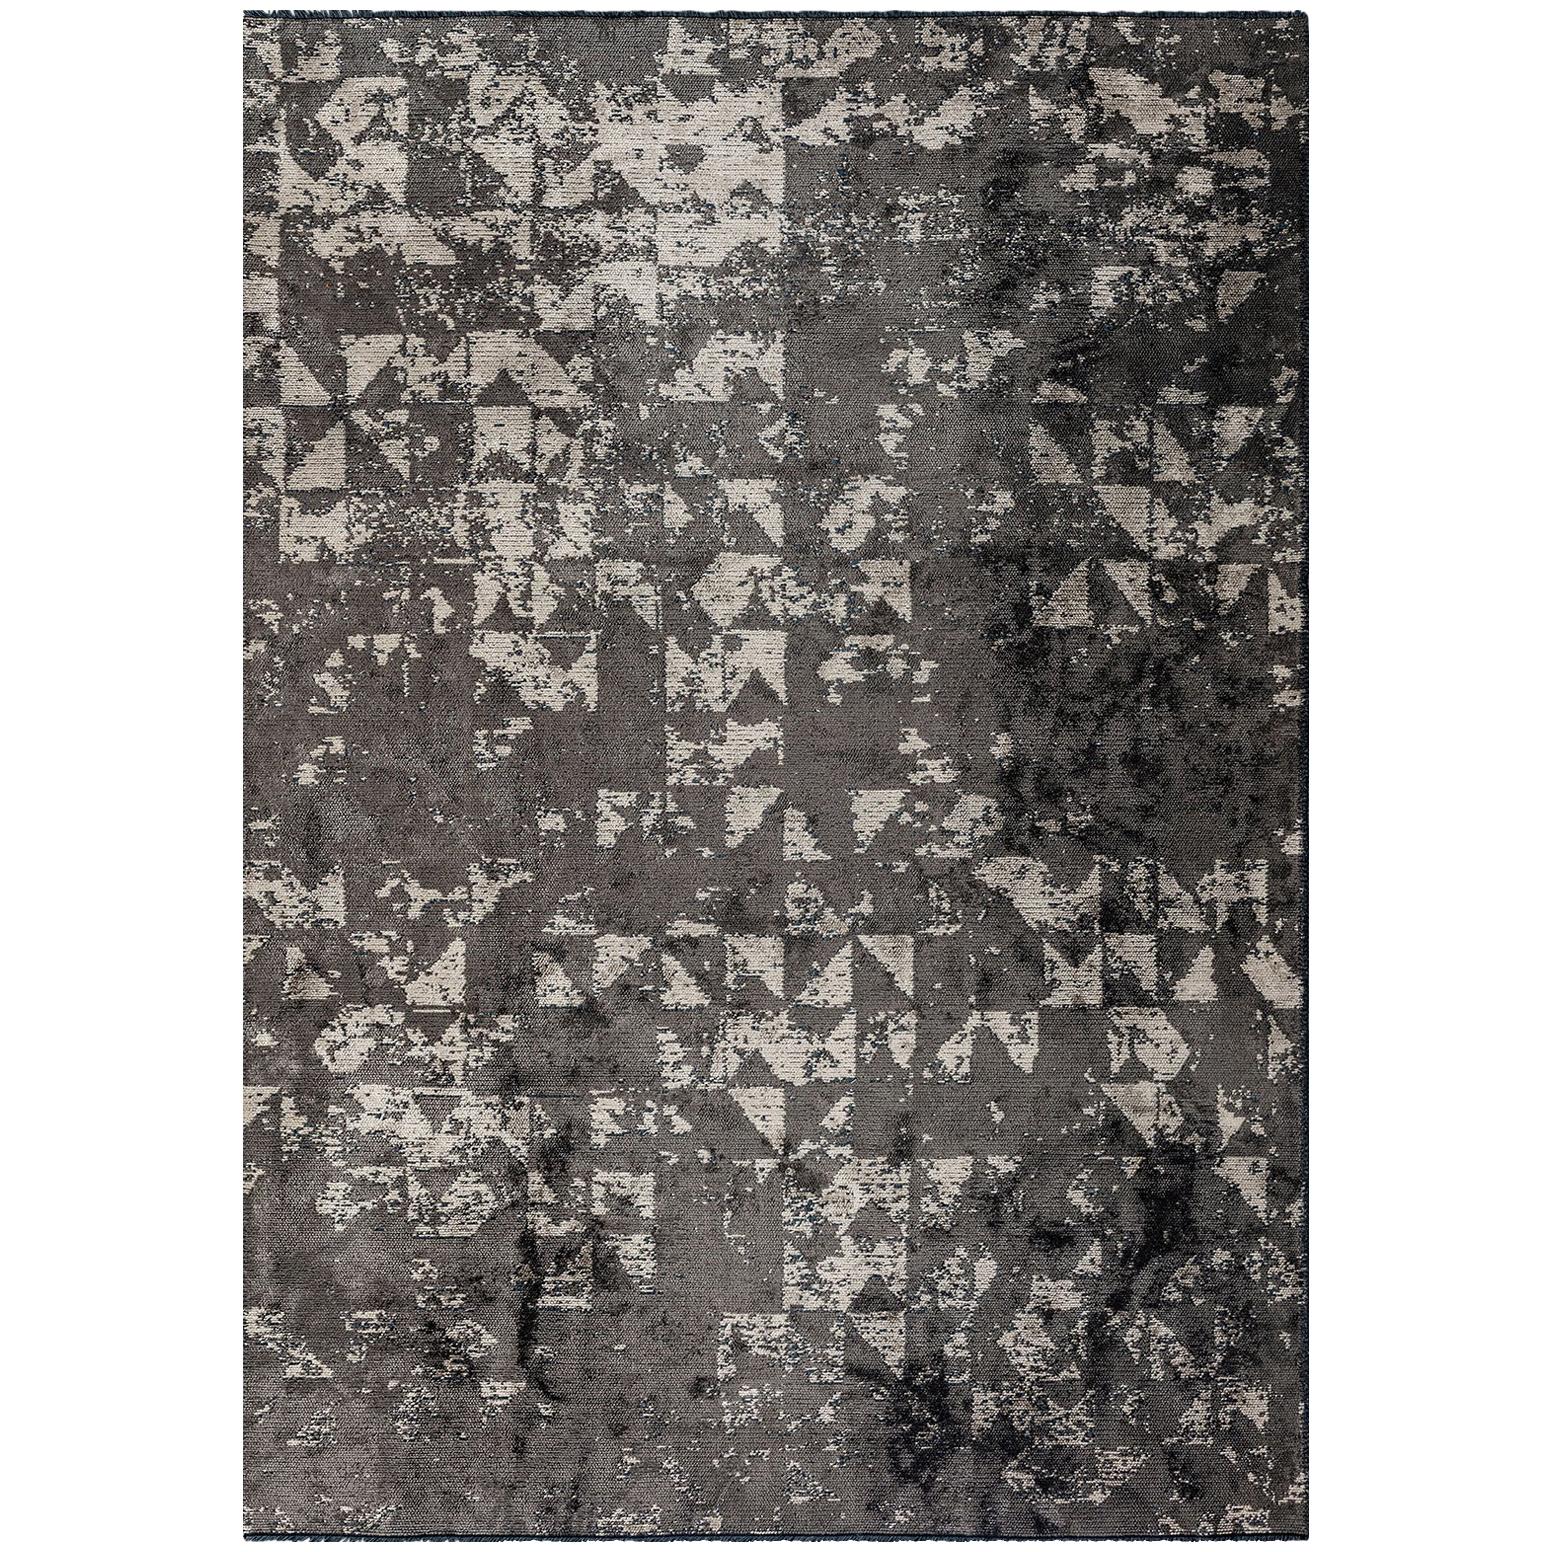 Tapis postmoderne gris argent et beige abstrait avec ou sans frange